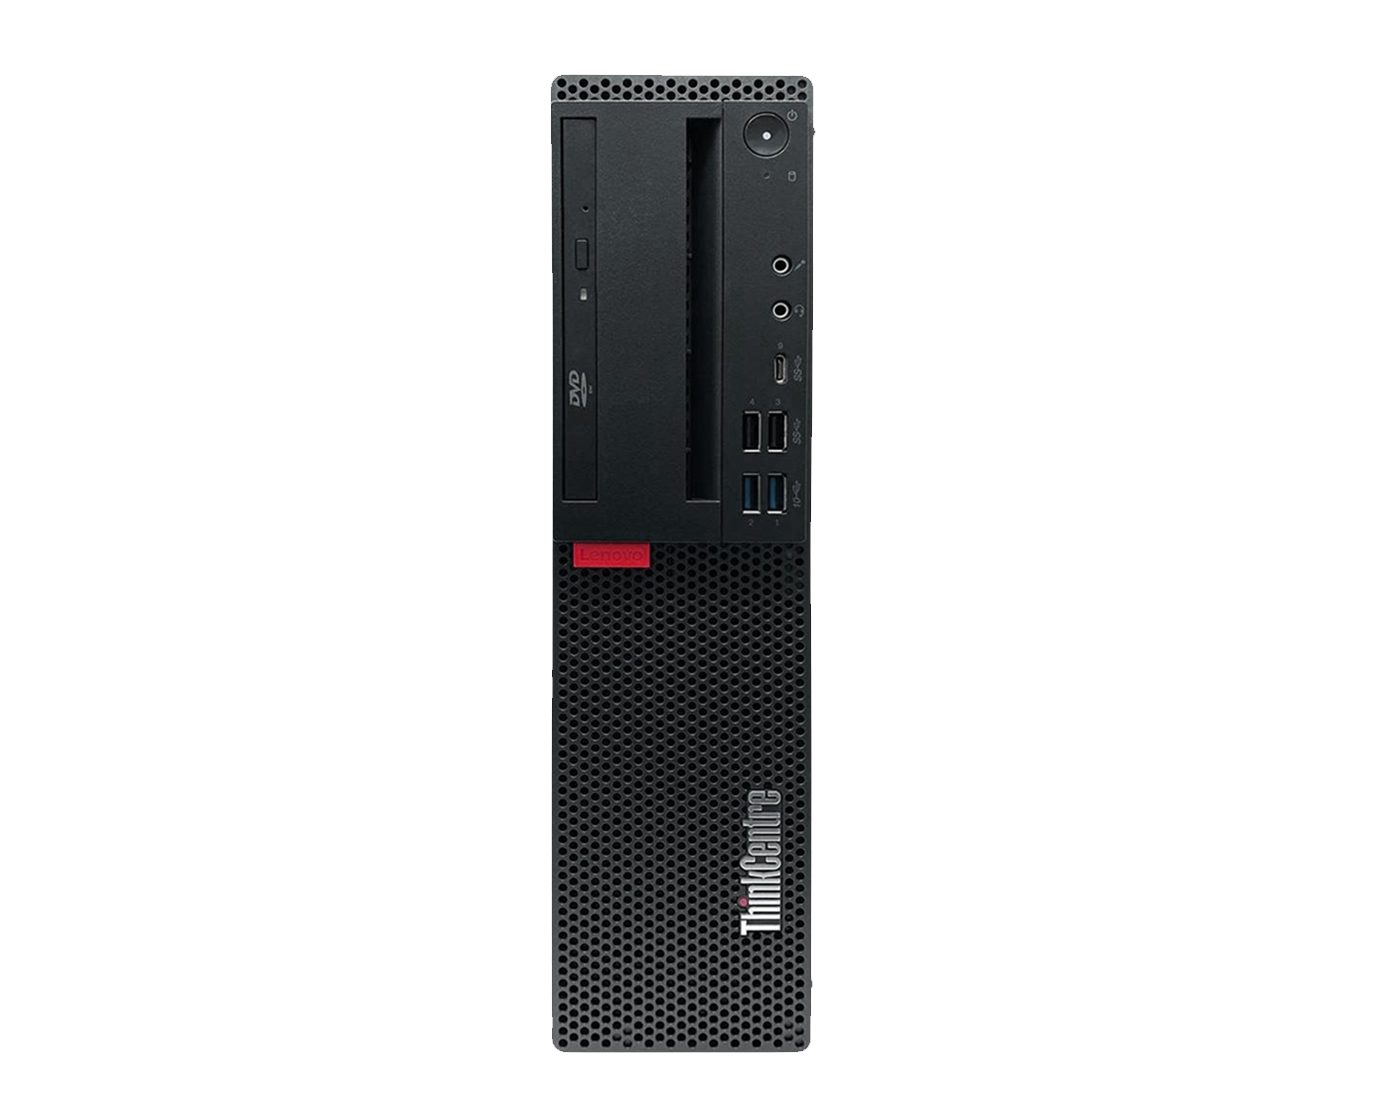 Pack Lenovo Thinkcentre M920s / Core I5 8500 3ghz / 8Gb ram / 500Gb / Win 10 Pro ¡Ex-demo!